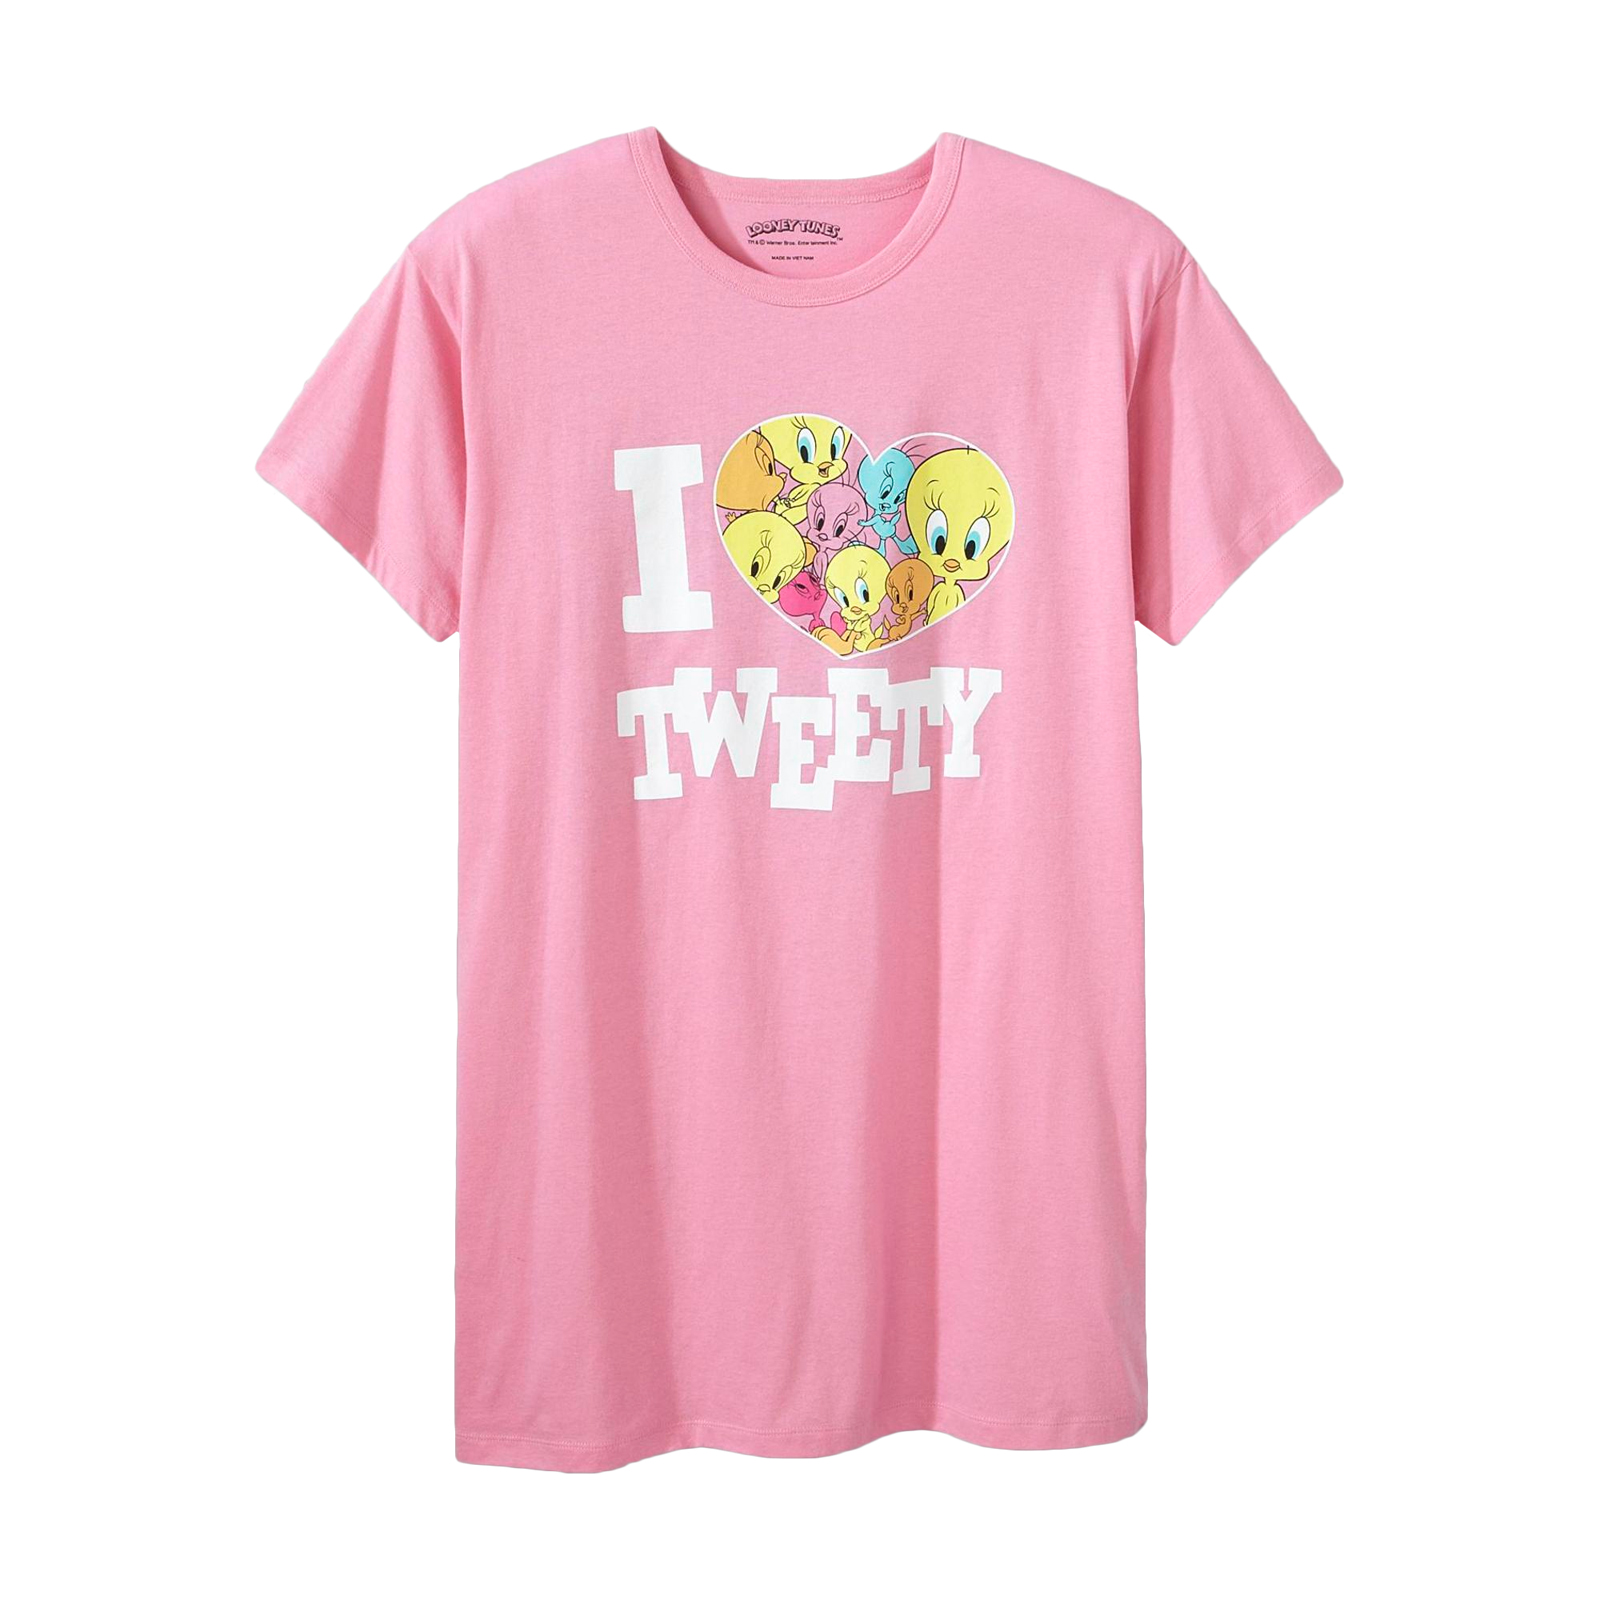 Warner Brothers Women's Plus Sleep Shirt - I Love Tweety